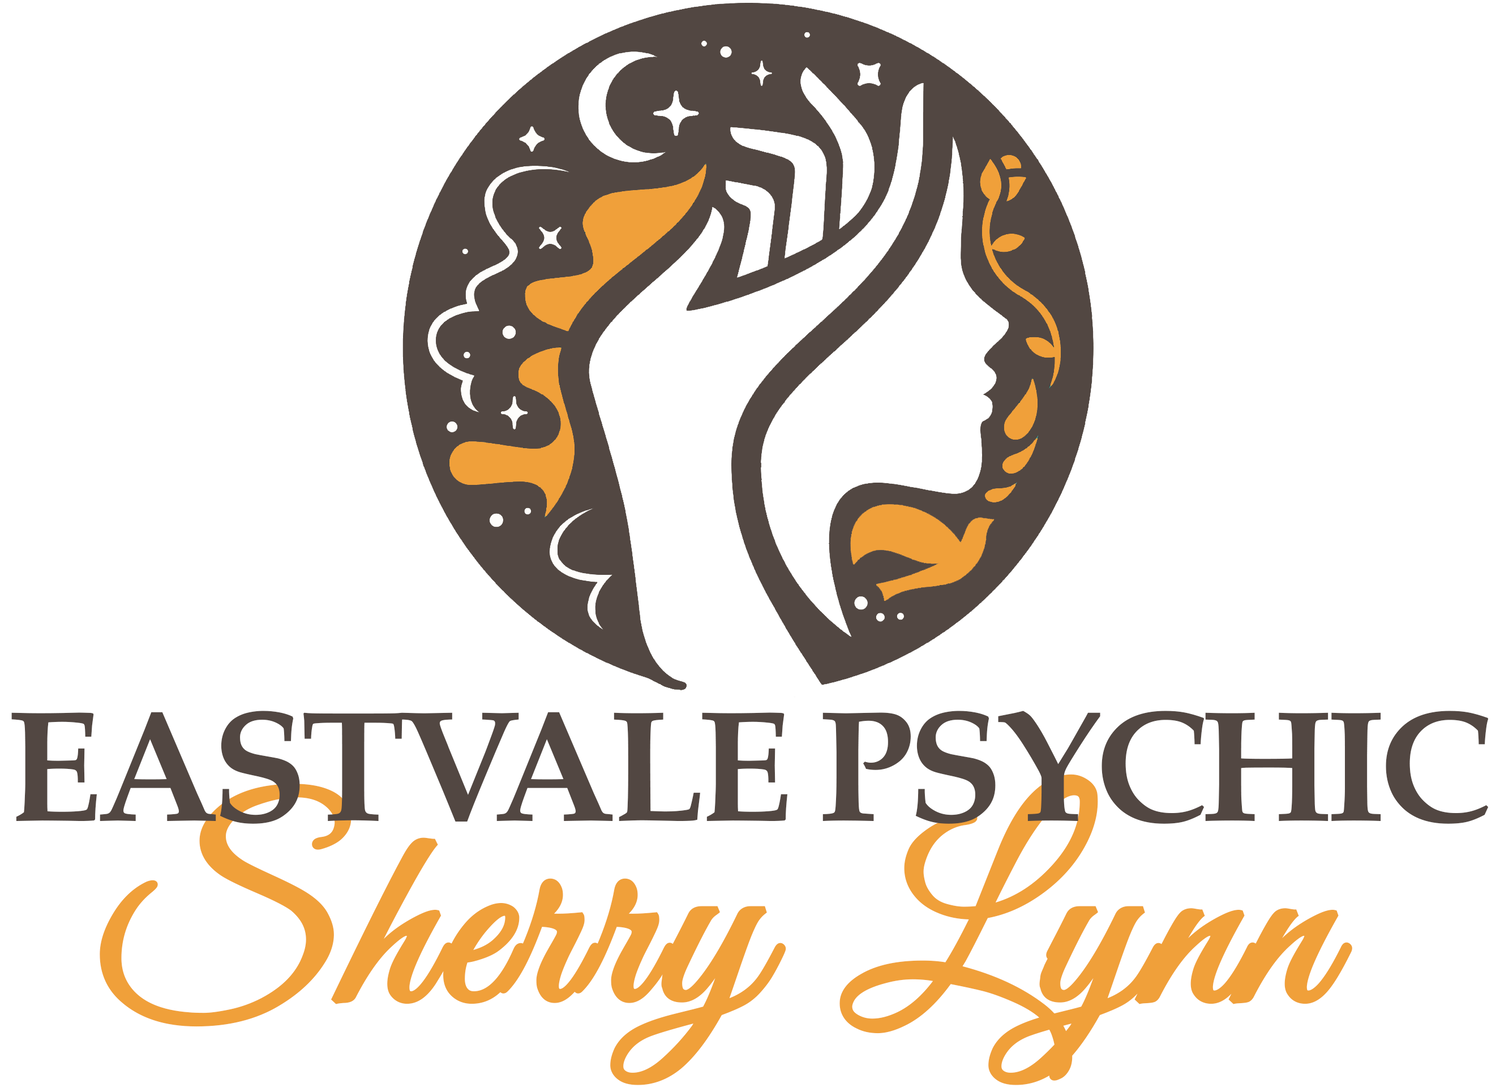 Eastvale Psychic Sherry Lynn